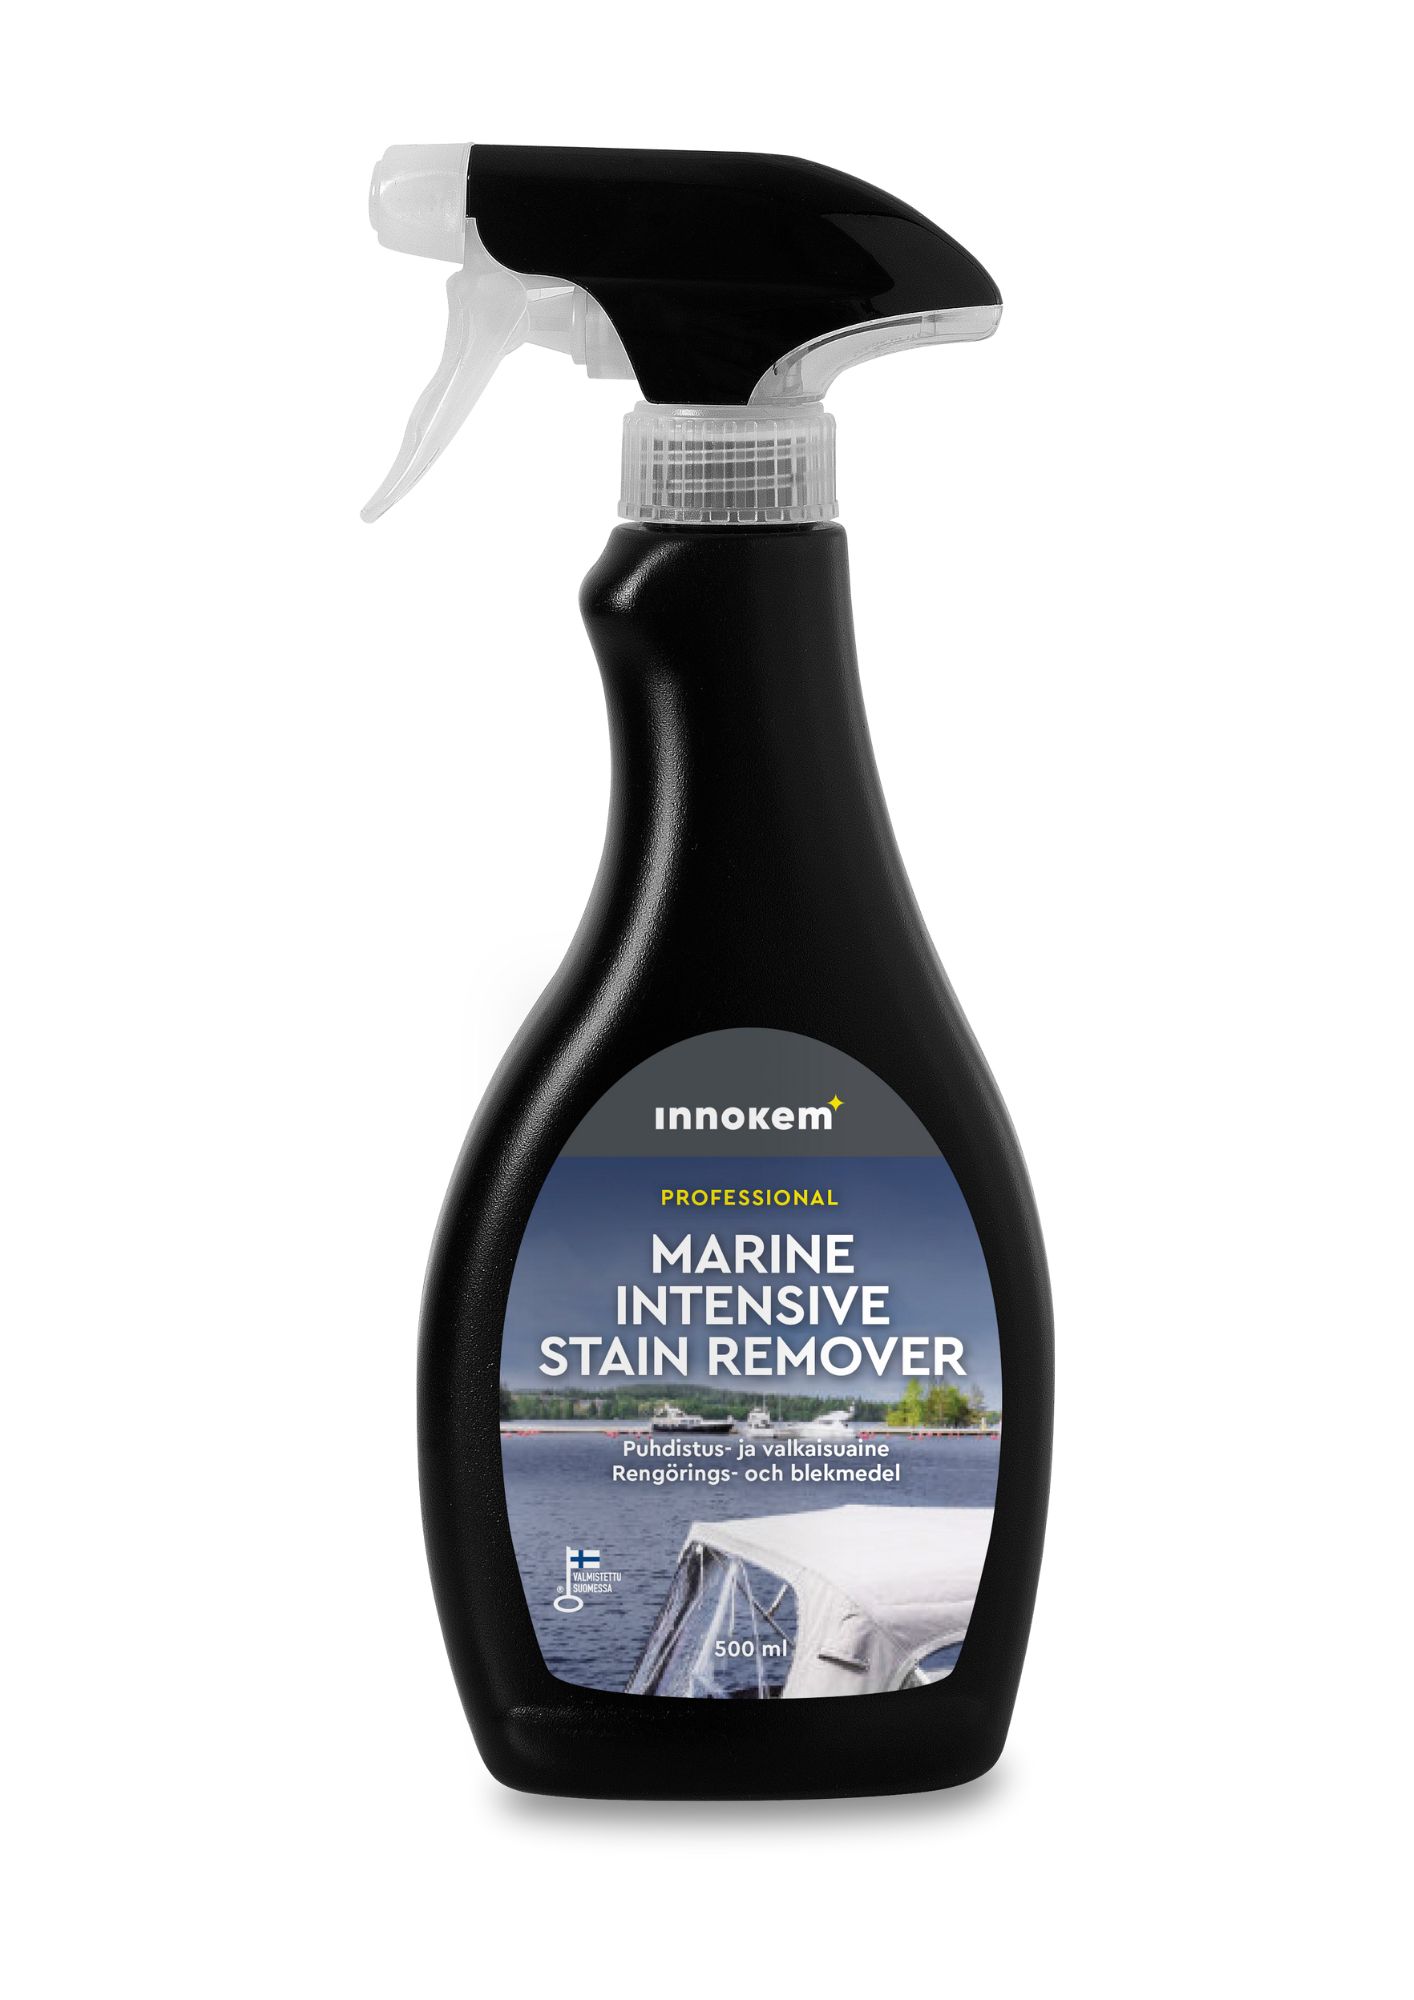 innokem marine intensive stain remover